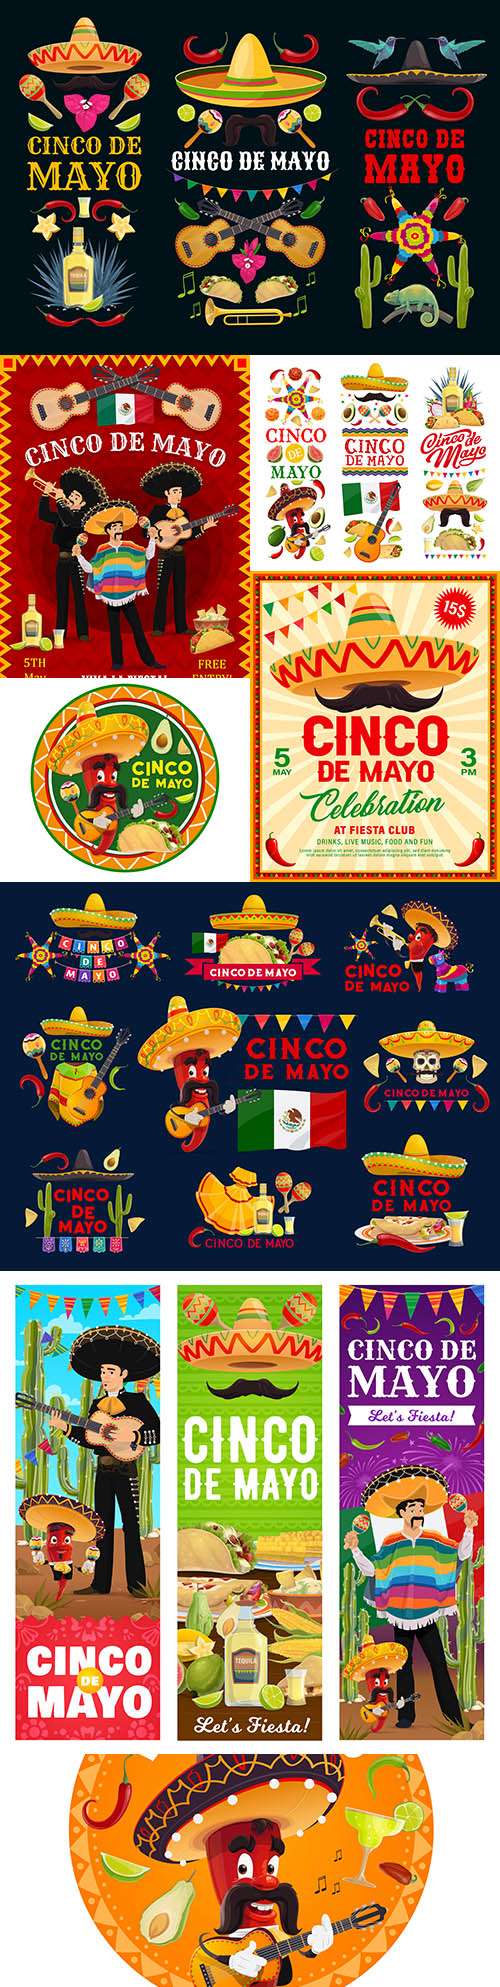 Cinco de Mayo Mexican holiday fiesta banners
